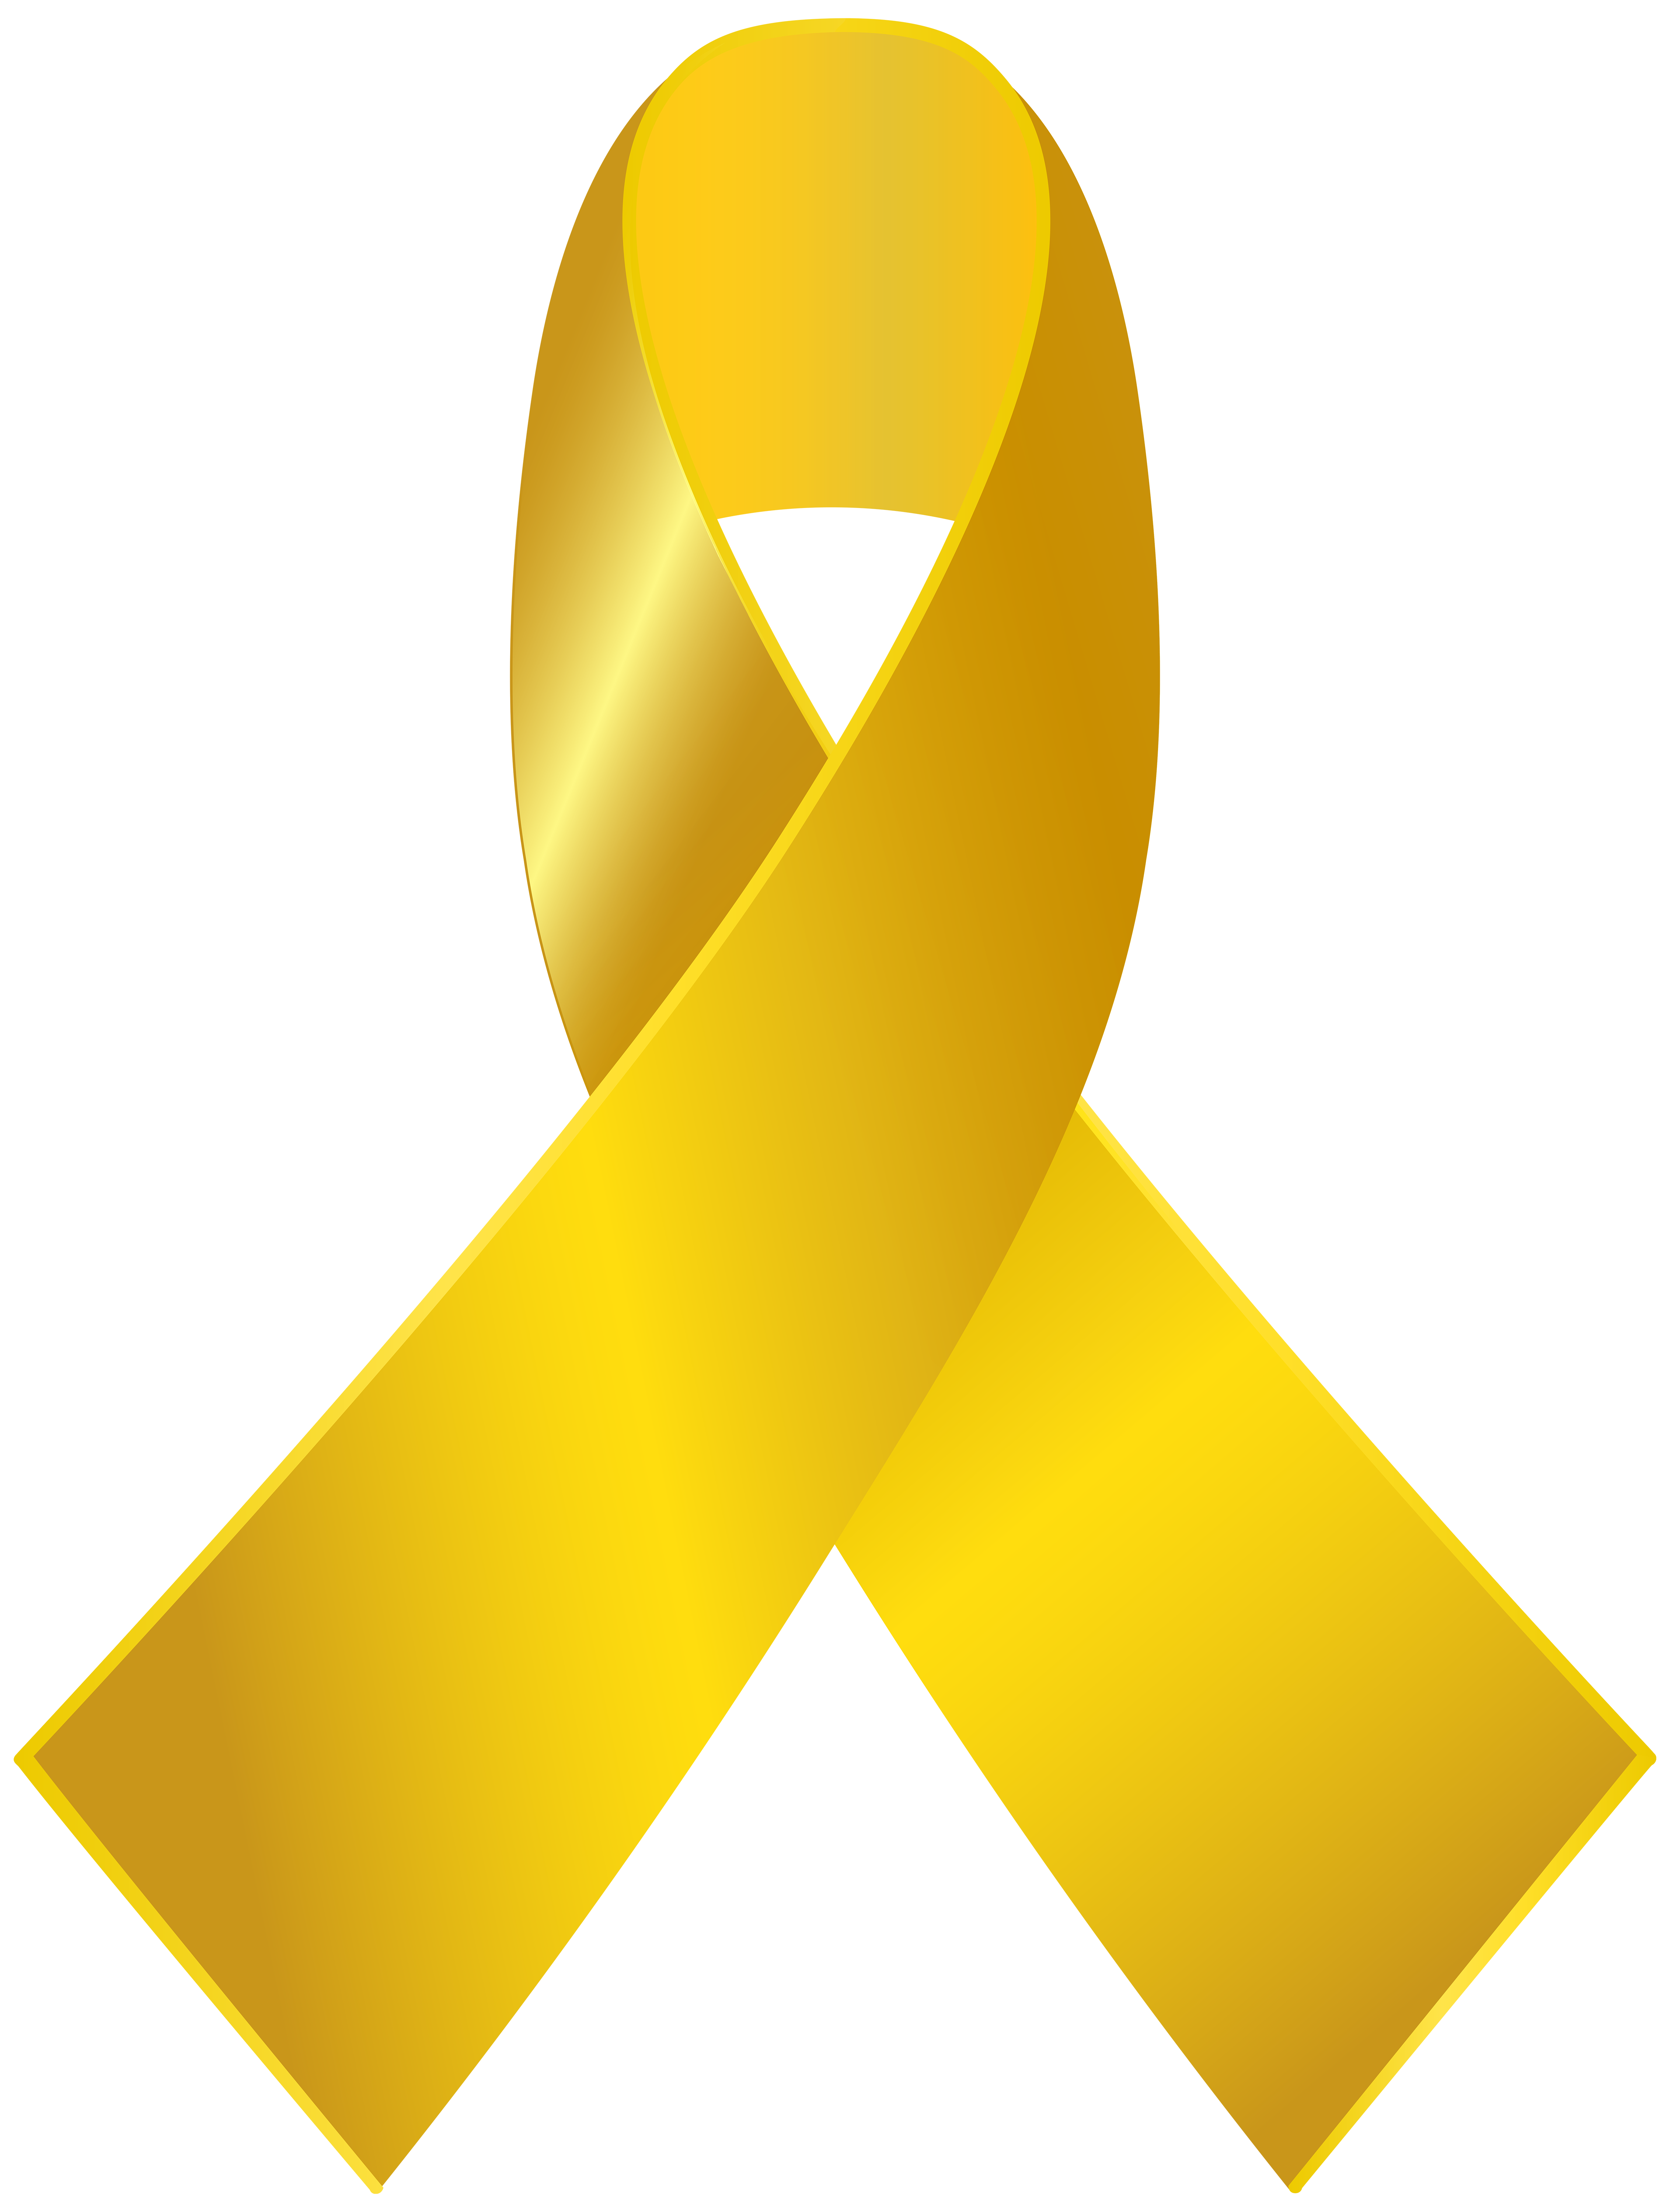 gold cancer ribbon clip art